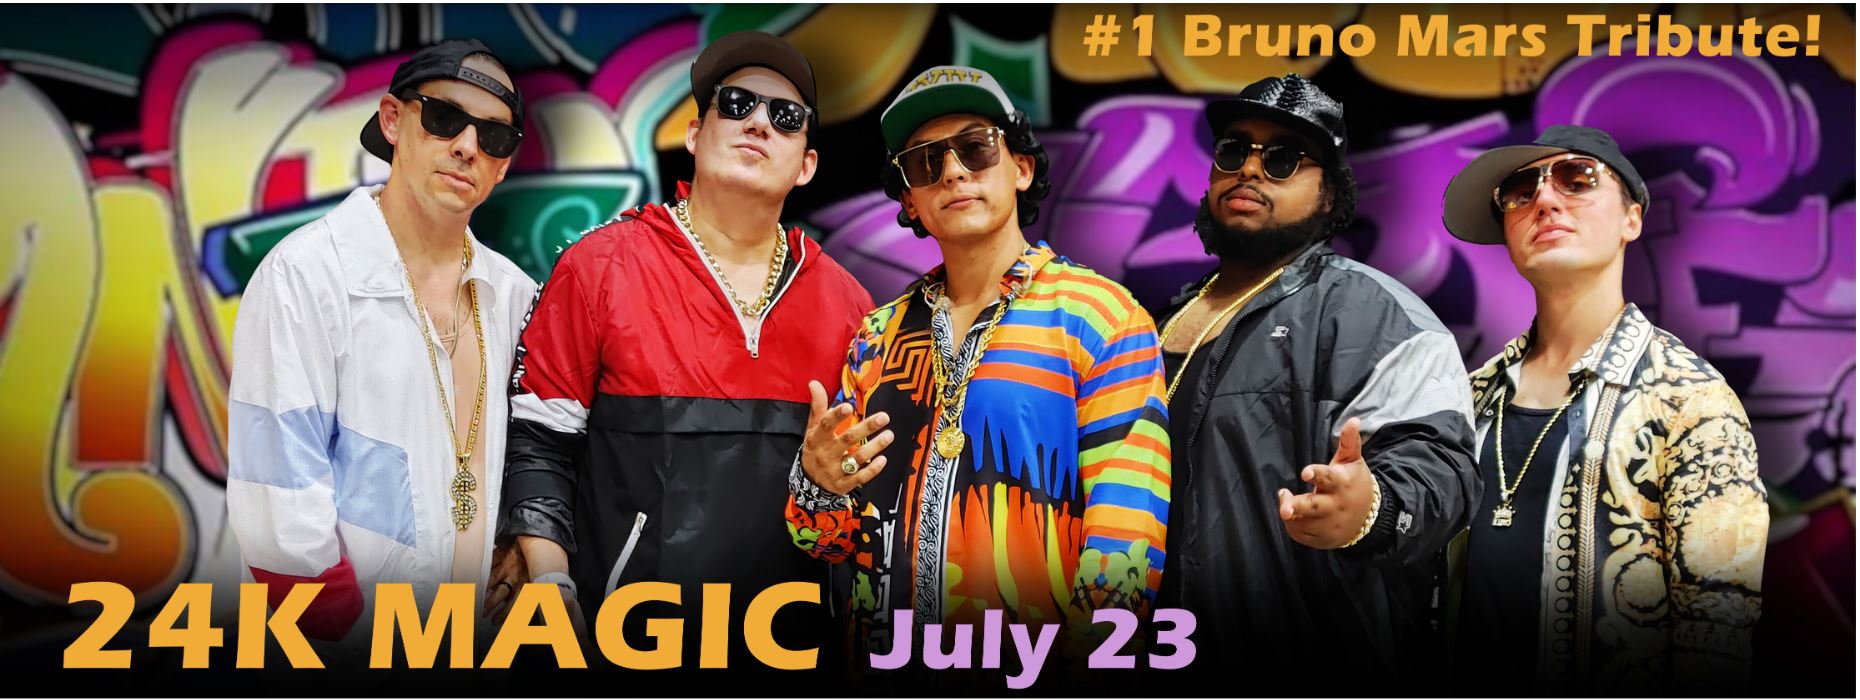 24K Magic, Bruno Mars Tribute Band